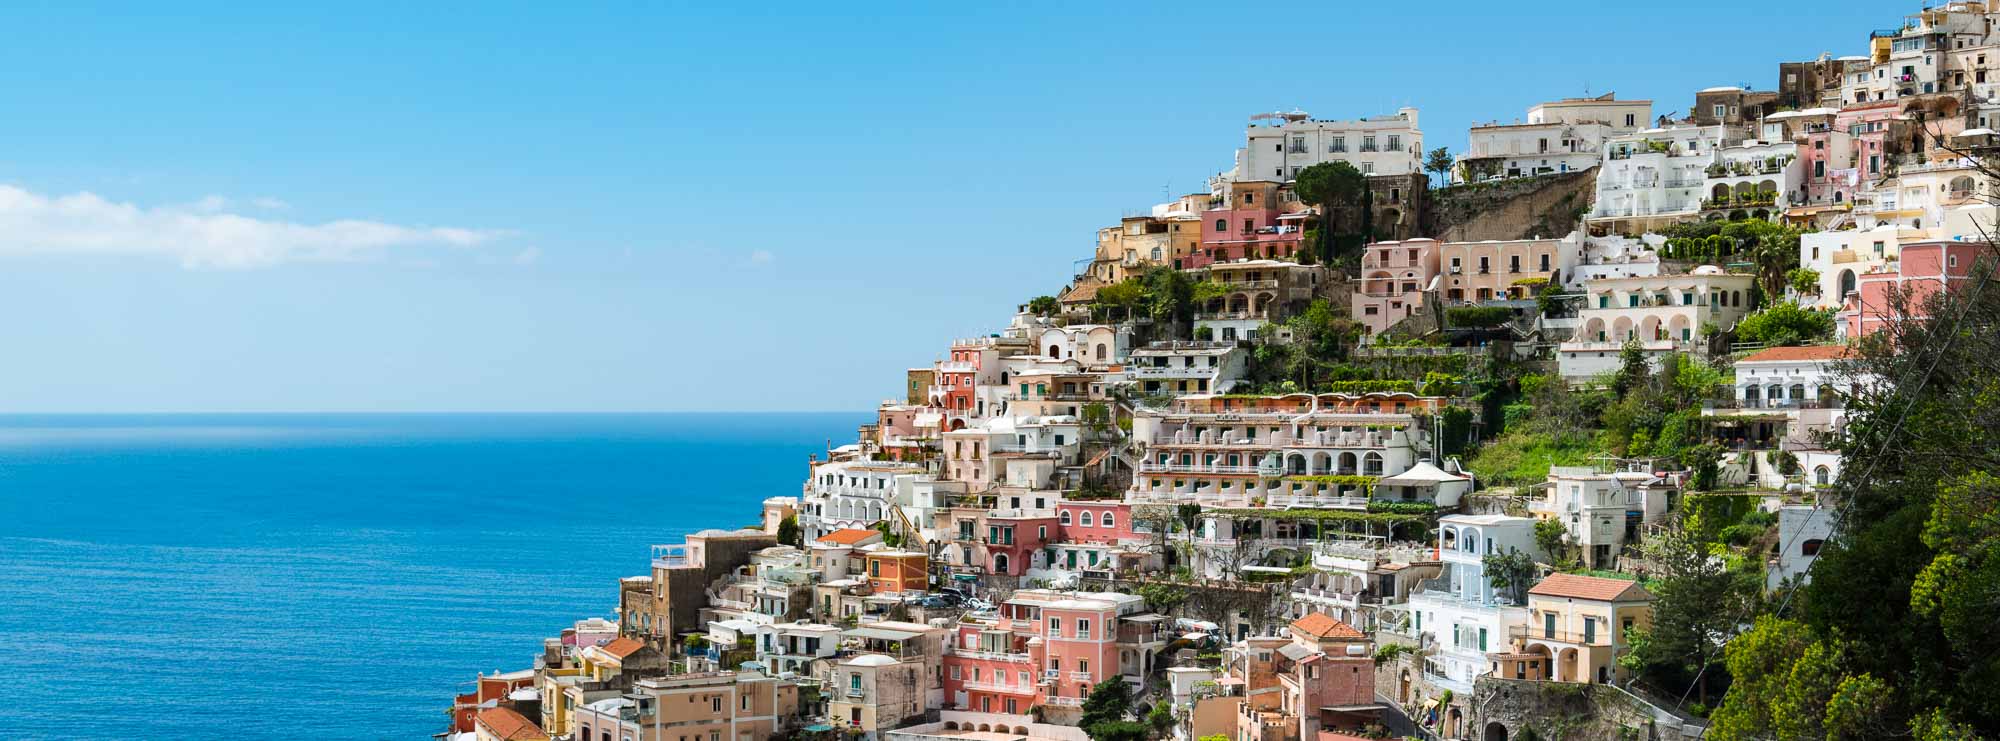 Europe Day 2 – Amalfi Coast to Tivoli